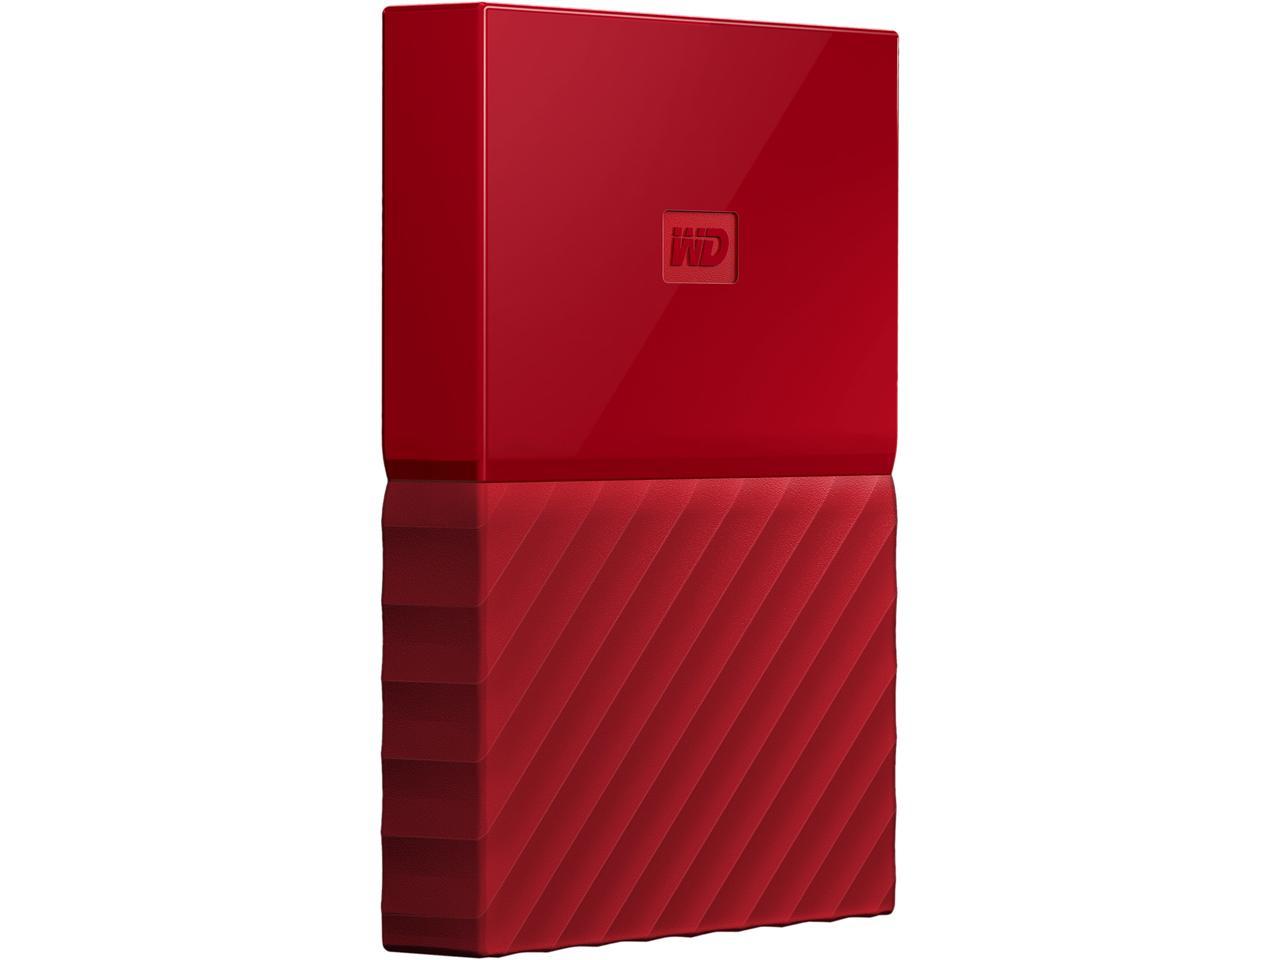 WD 1TB My Passport Portable Hard Drive USB 3.0 Model WDBYNN0010BRD-WESN Red